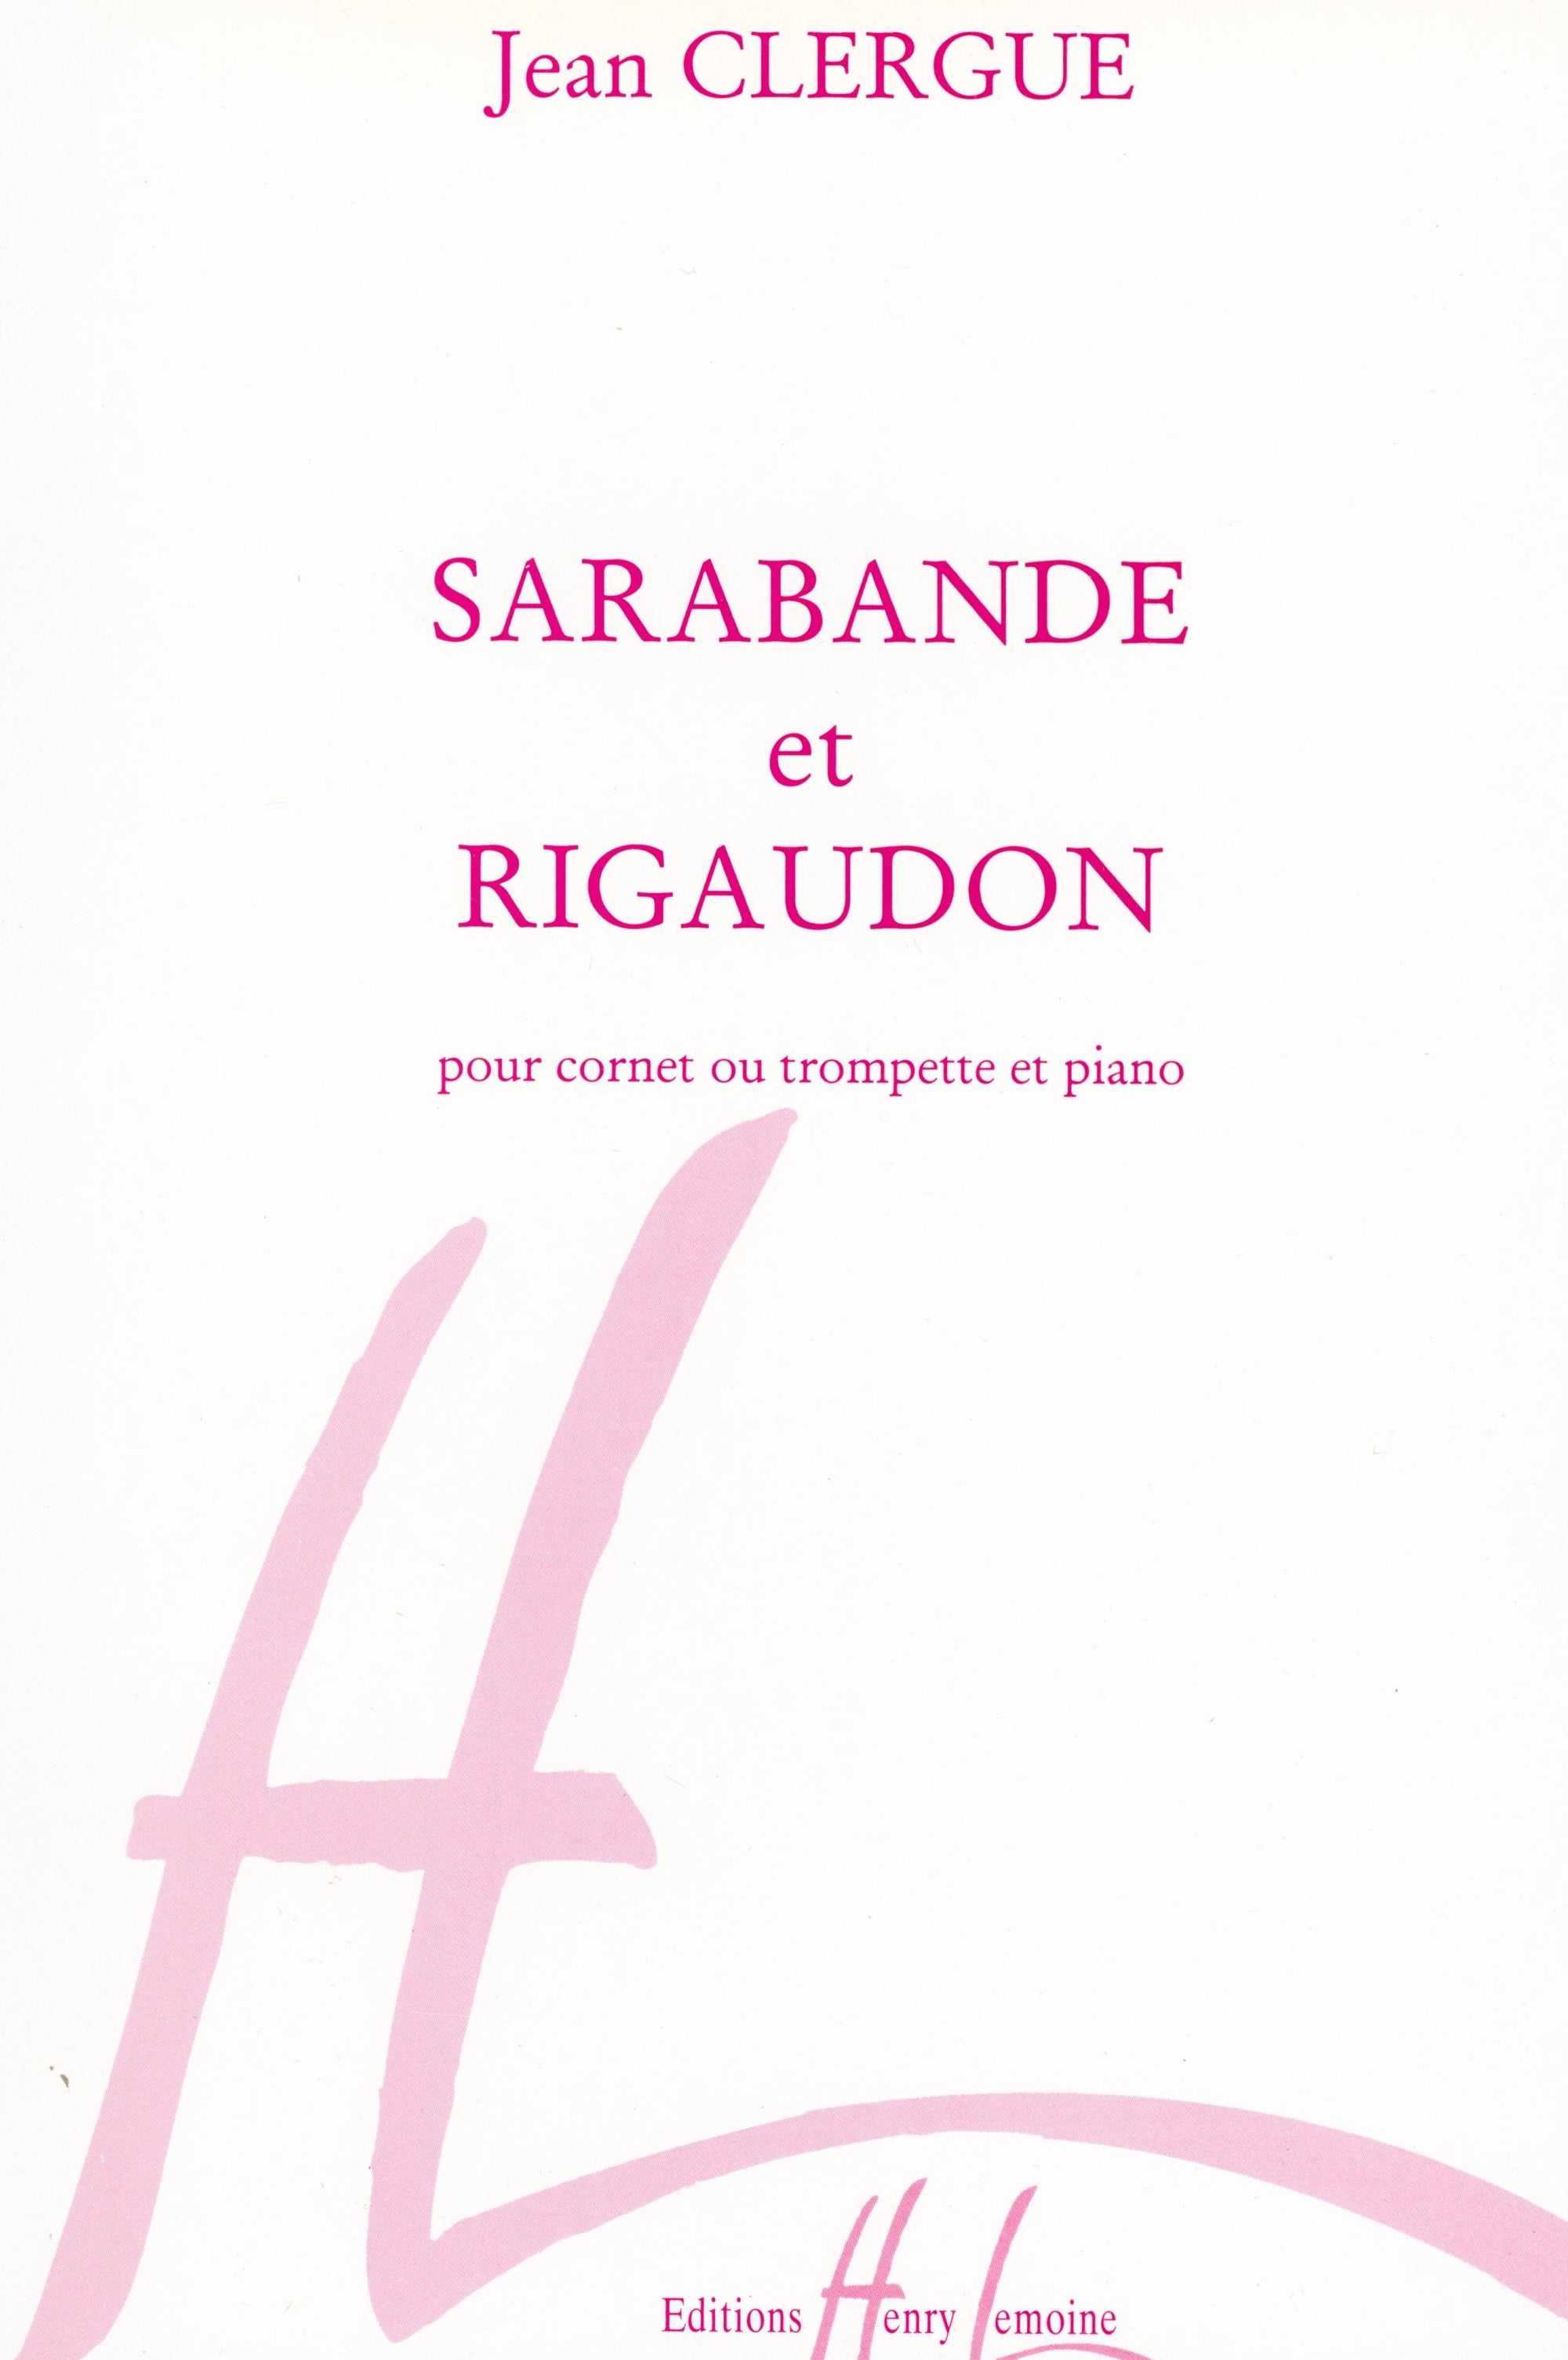 Clergue: Sarabande et Rigaudon